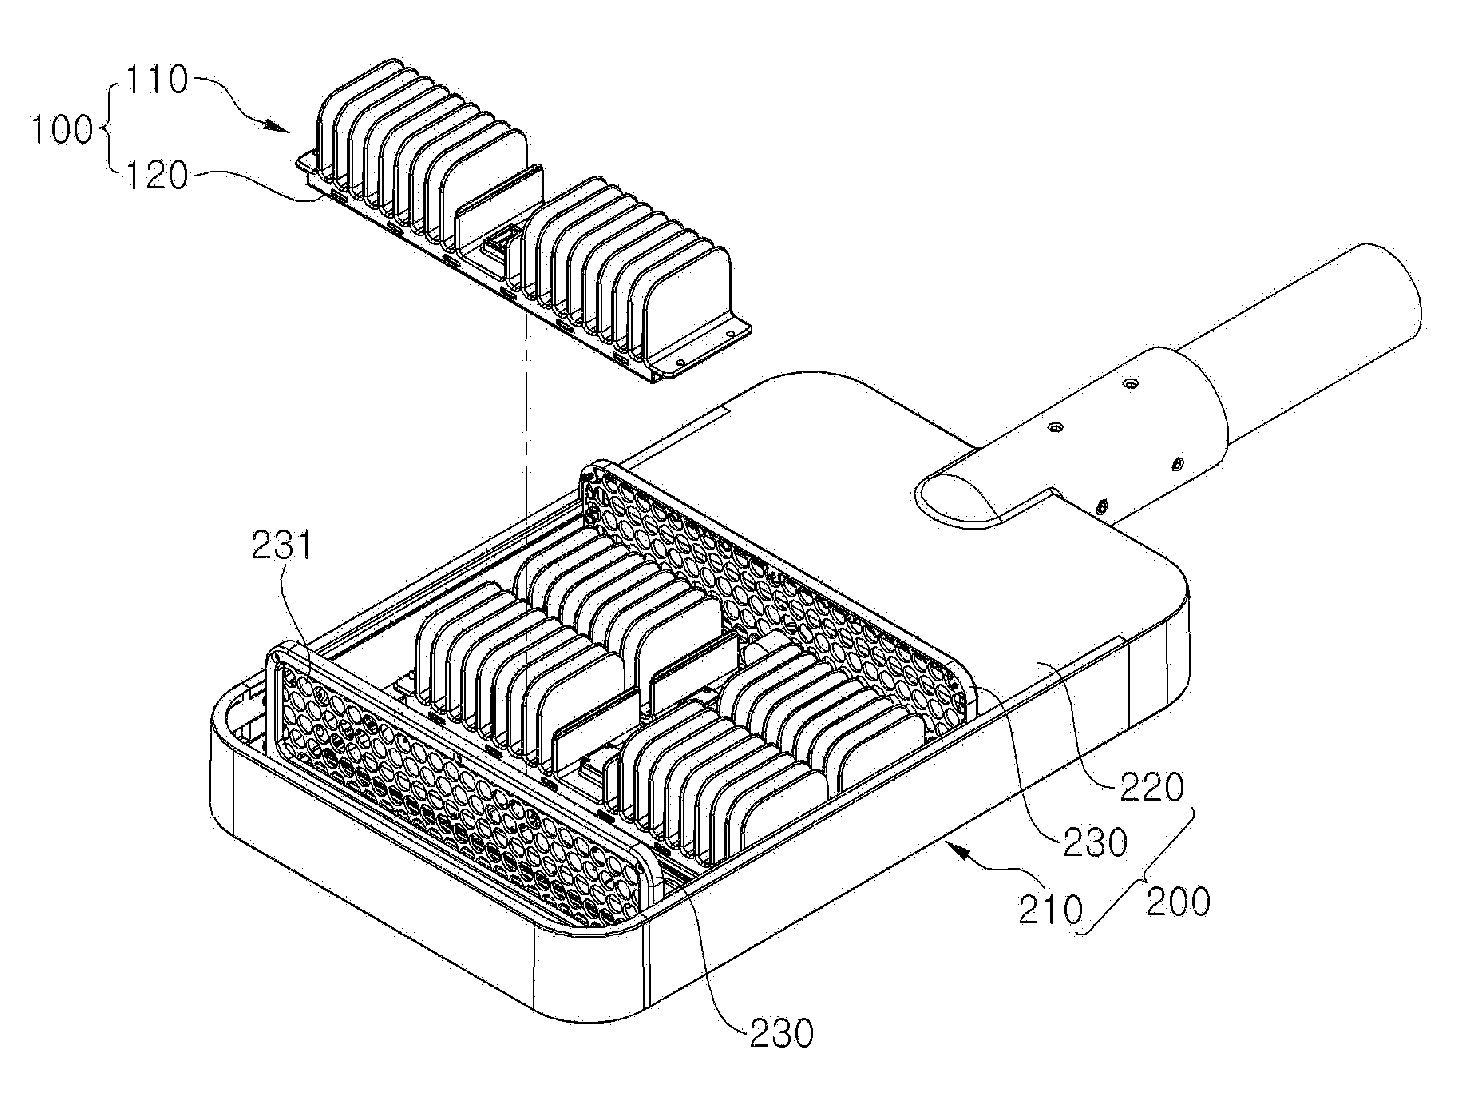 Optical semiconductor lighting apparatus